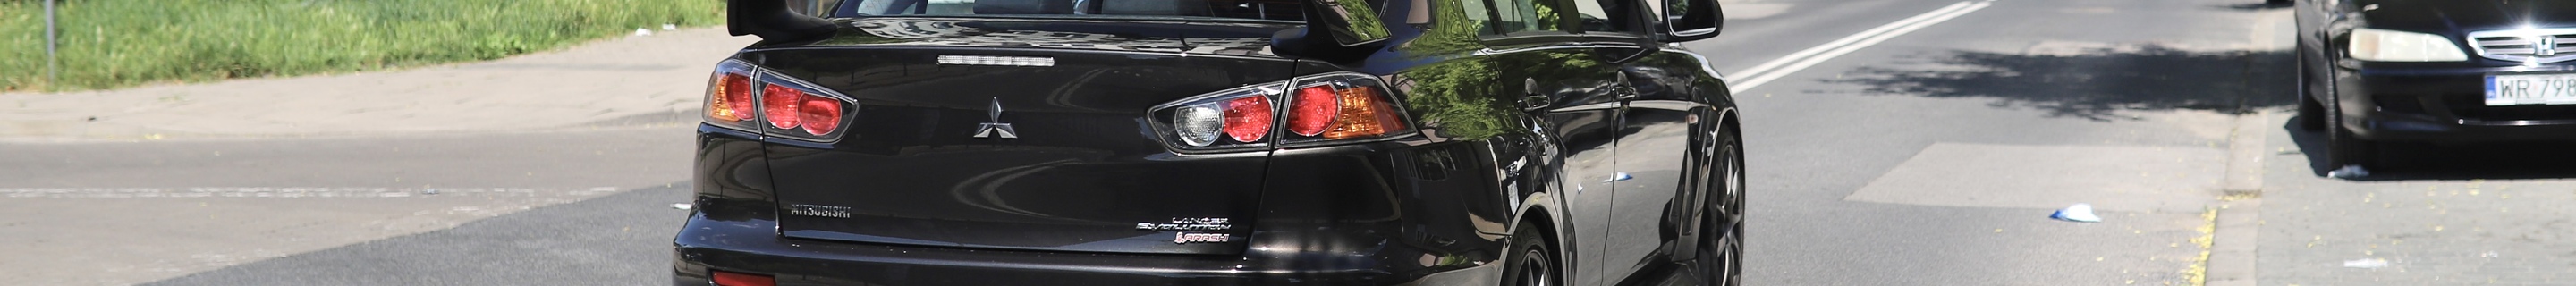 Mitsubishi Lancer Evolution X Arashi